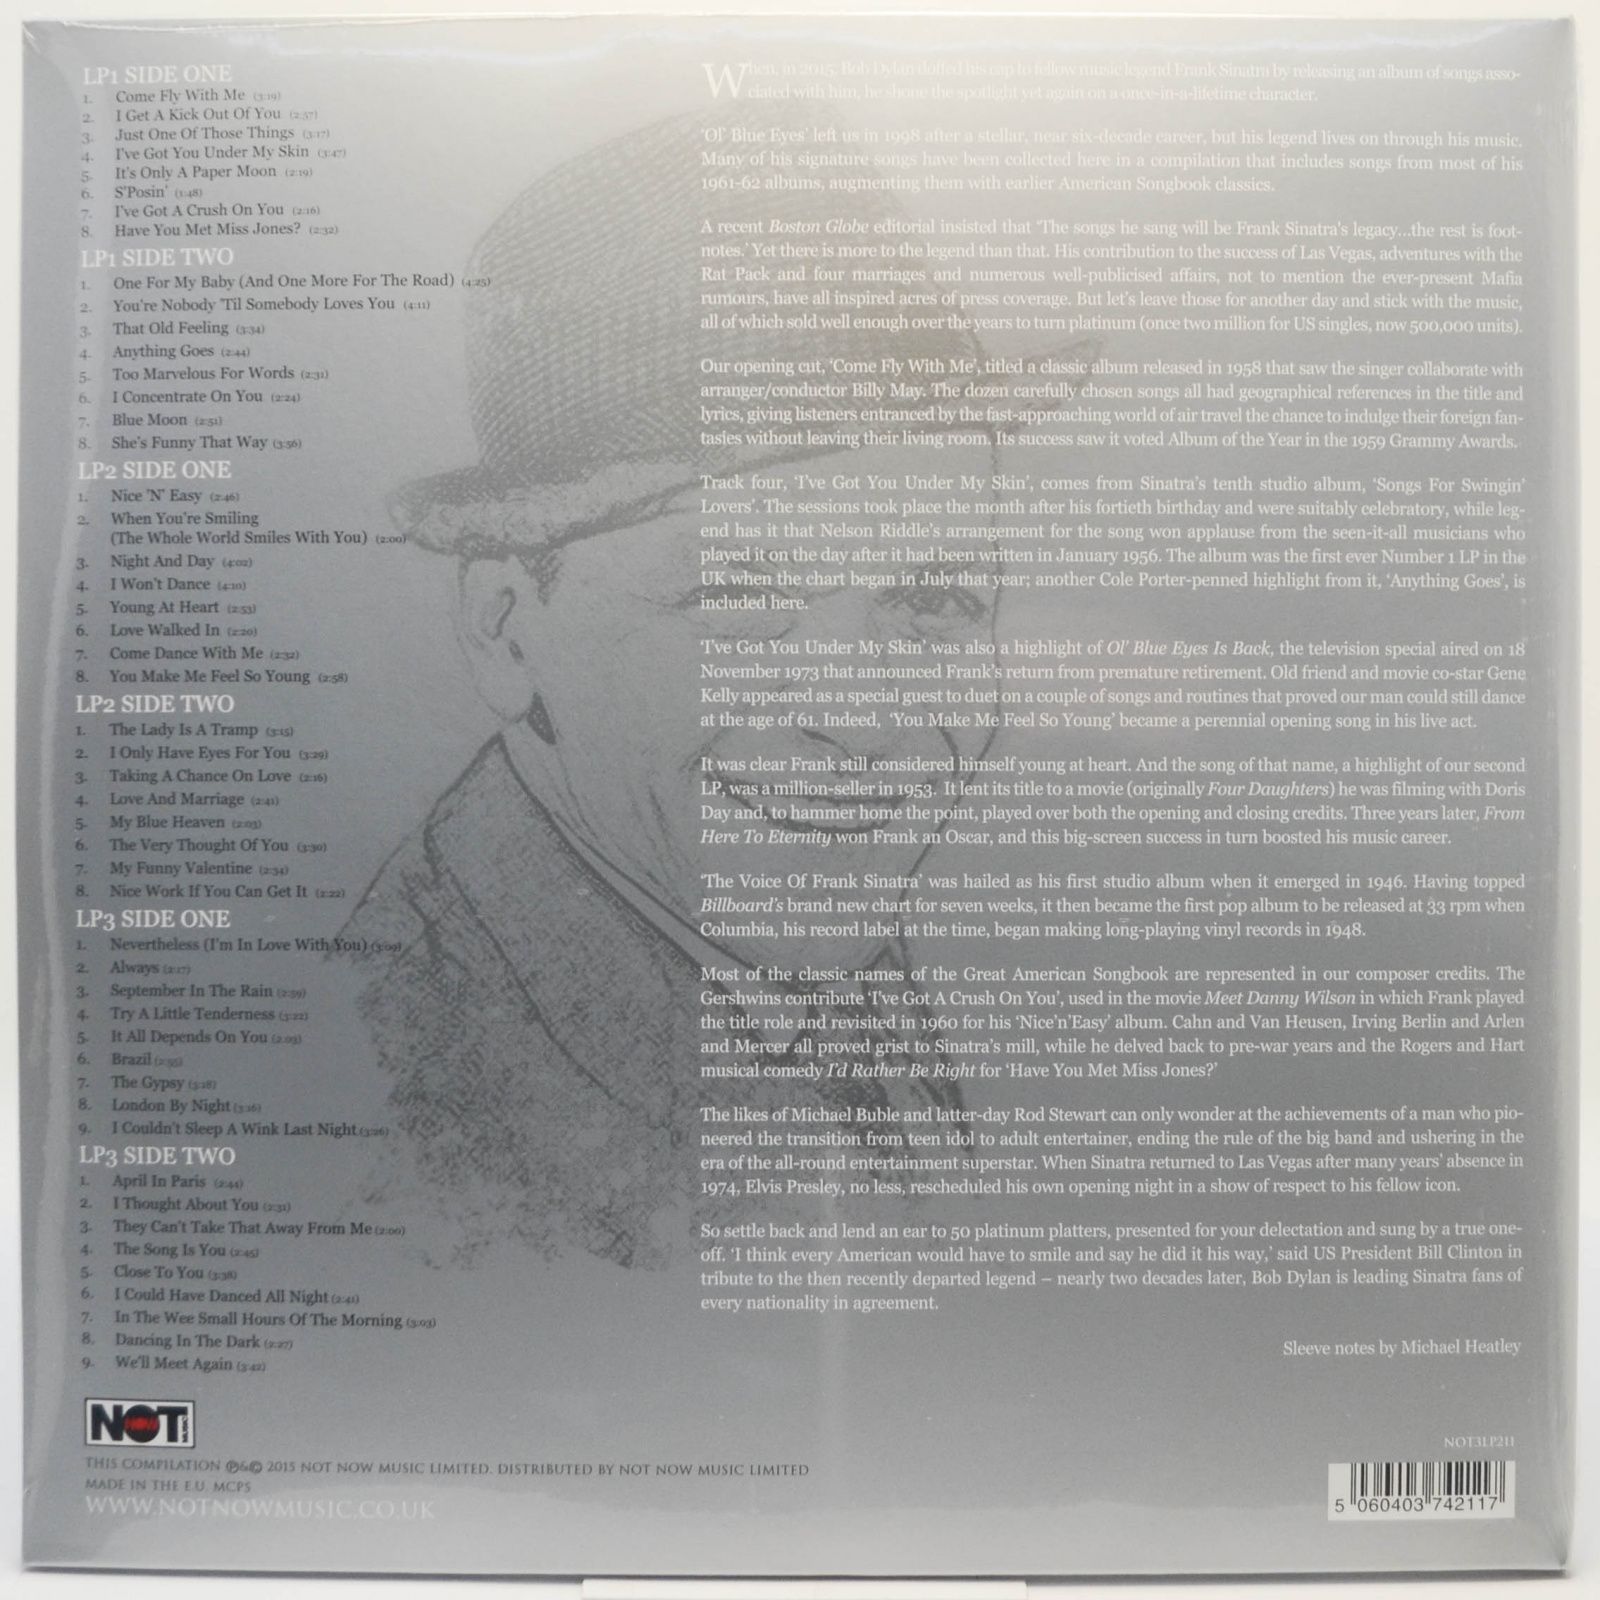 Frank Sinatra — The Platinum Collection (3LP), 2015